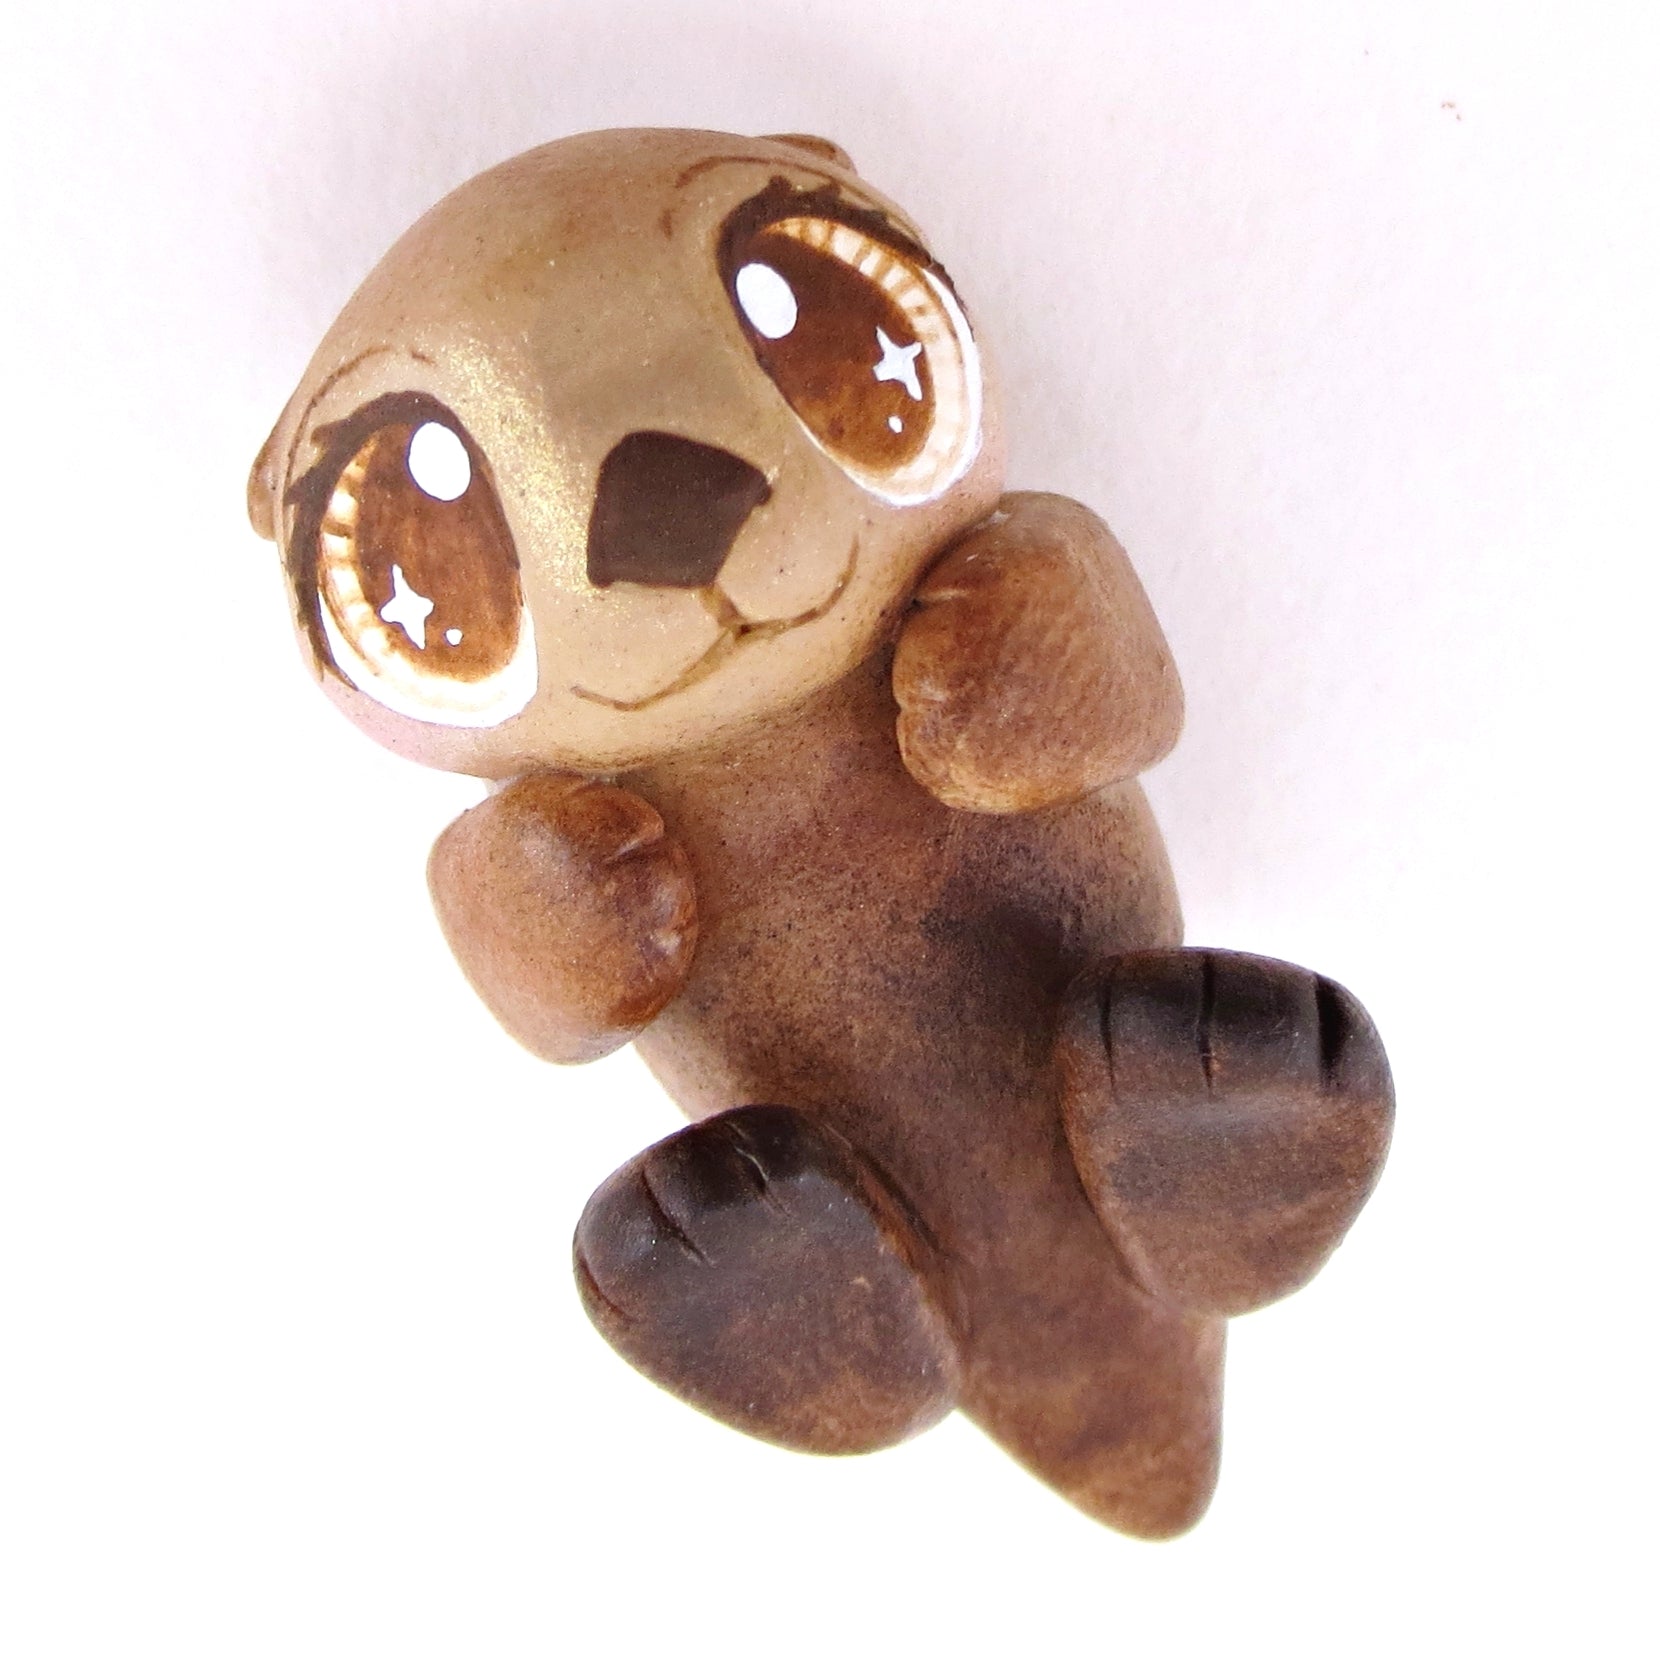 Sea Otter Figurine - Polymer Clay Enchanted Ocean Animals